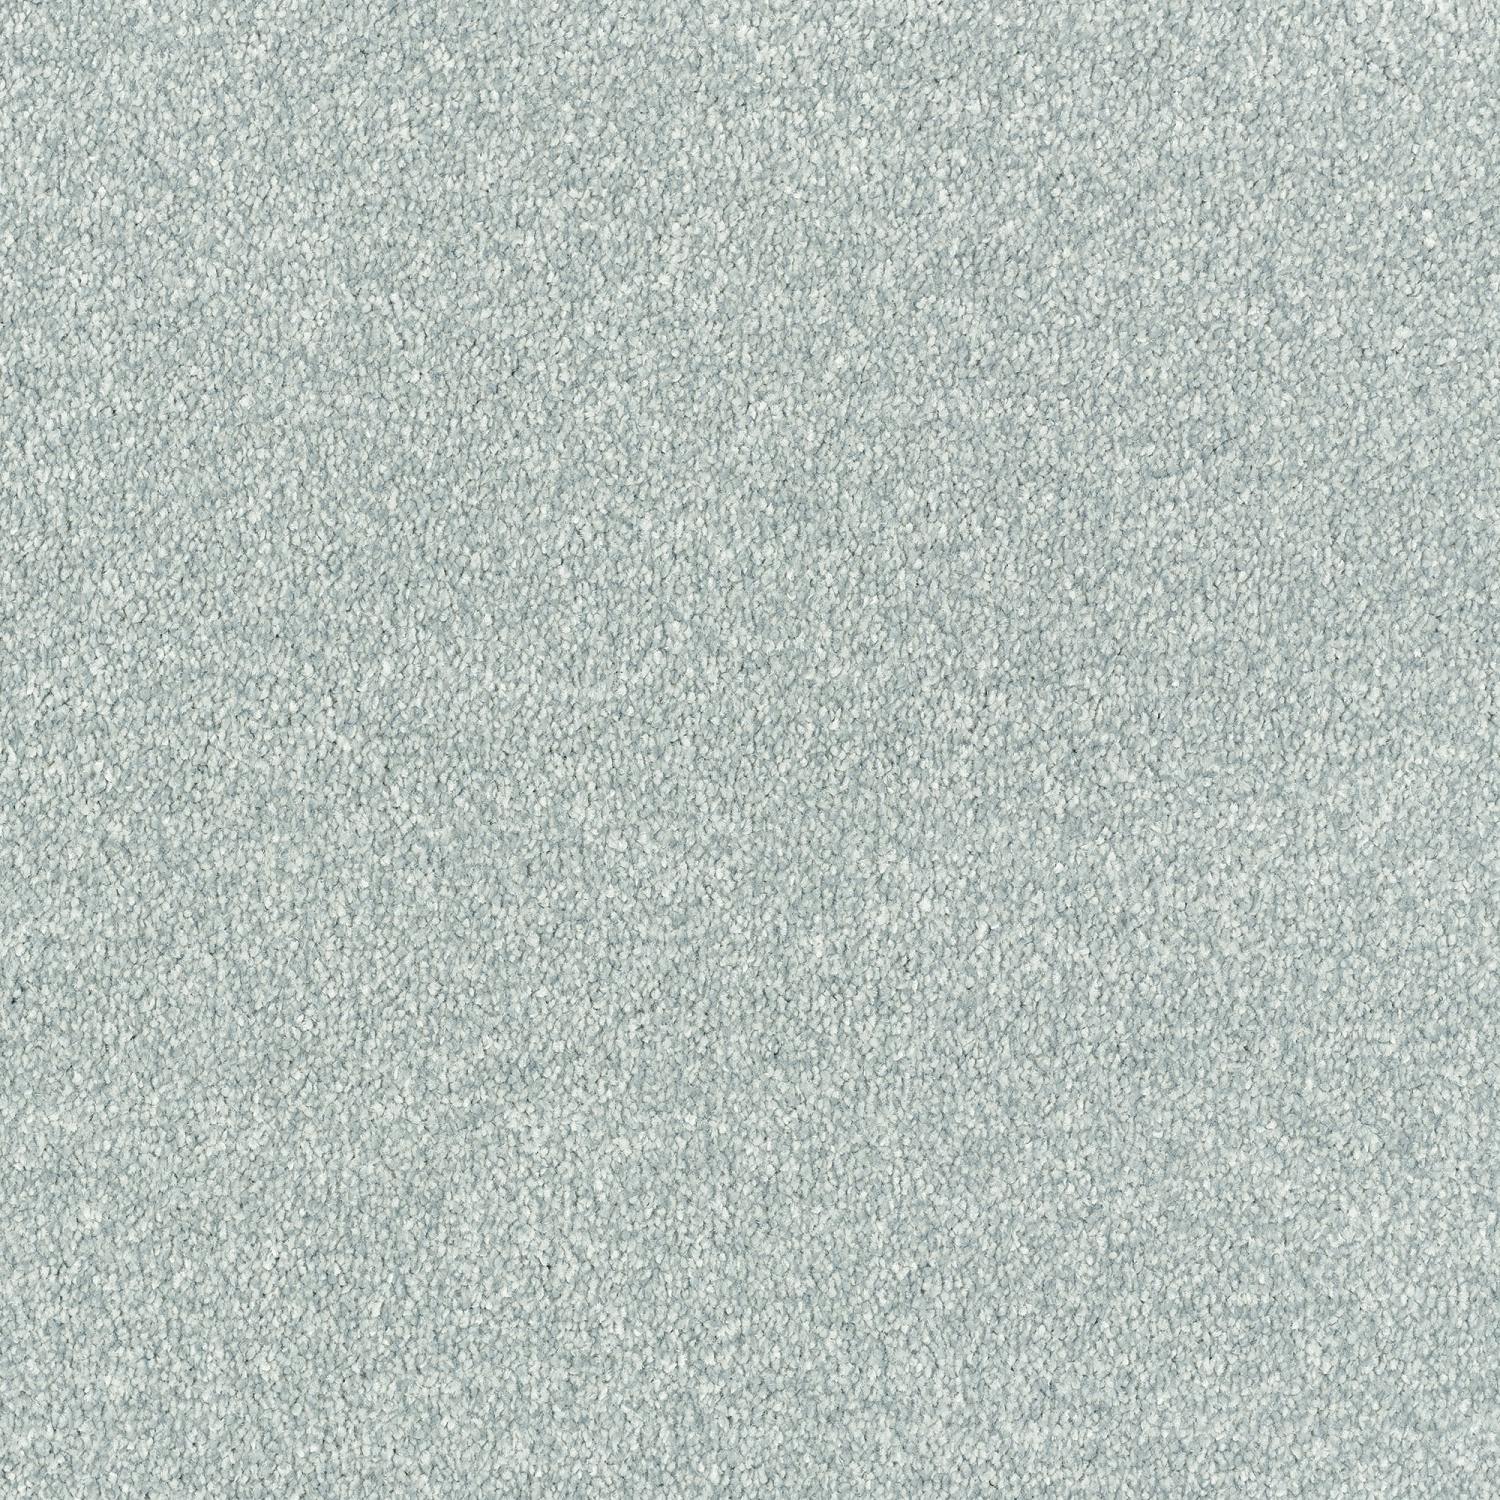 Stainfree Maximus Saxony Carpet - Misty Blue